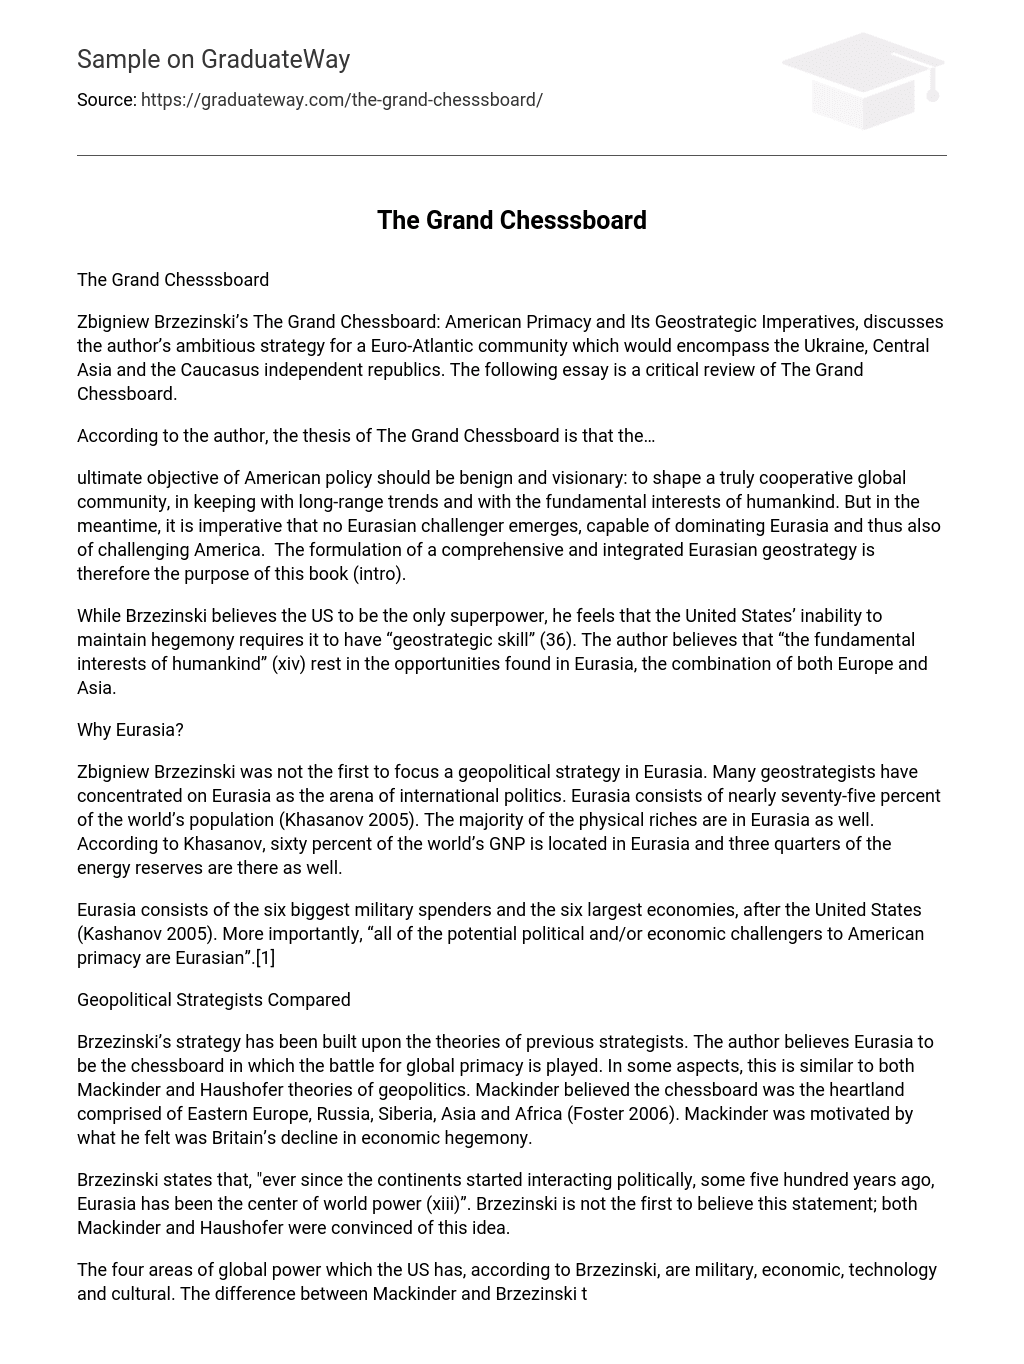 The Grand Chesssboard Short Summary